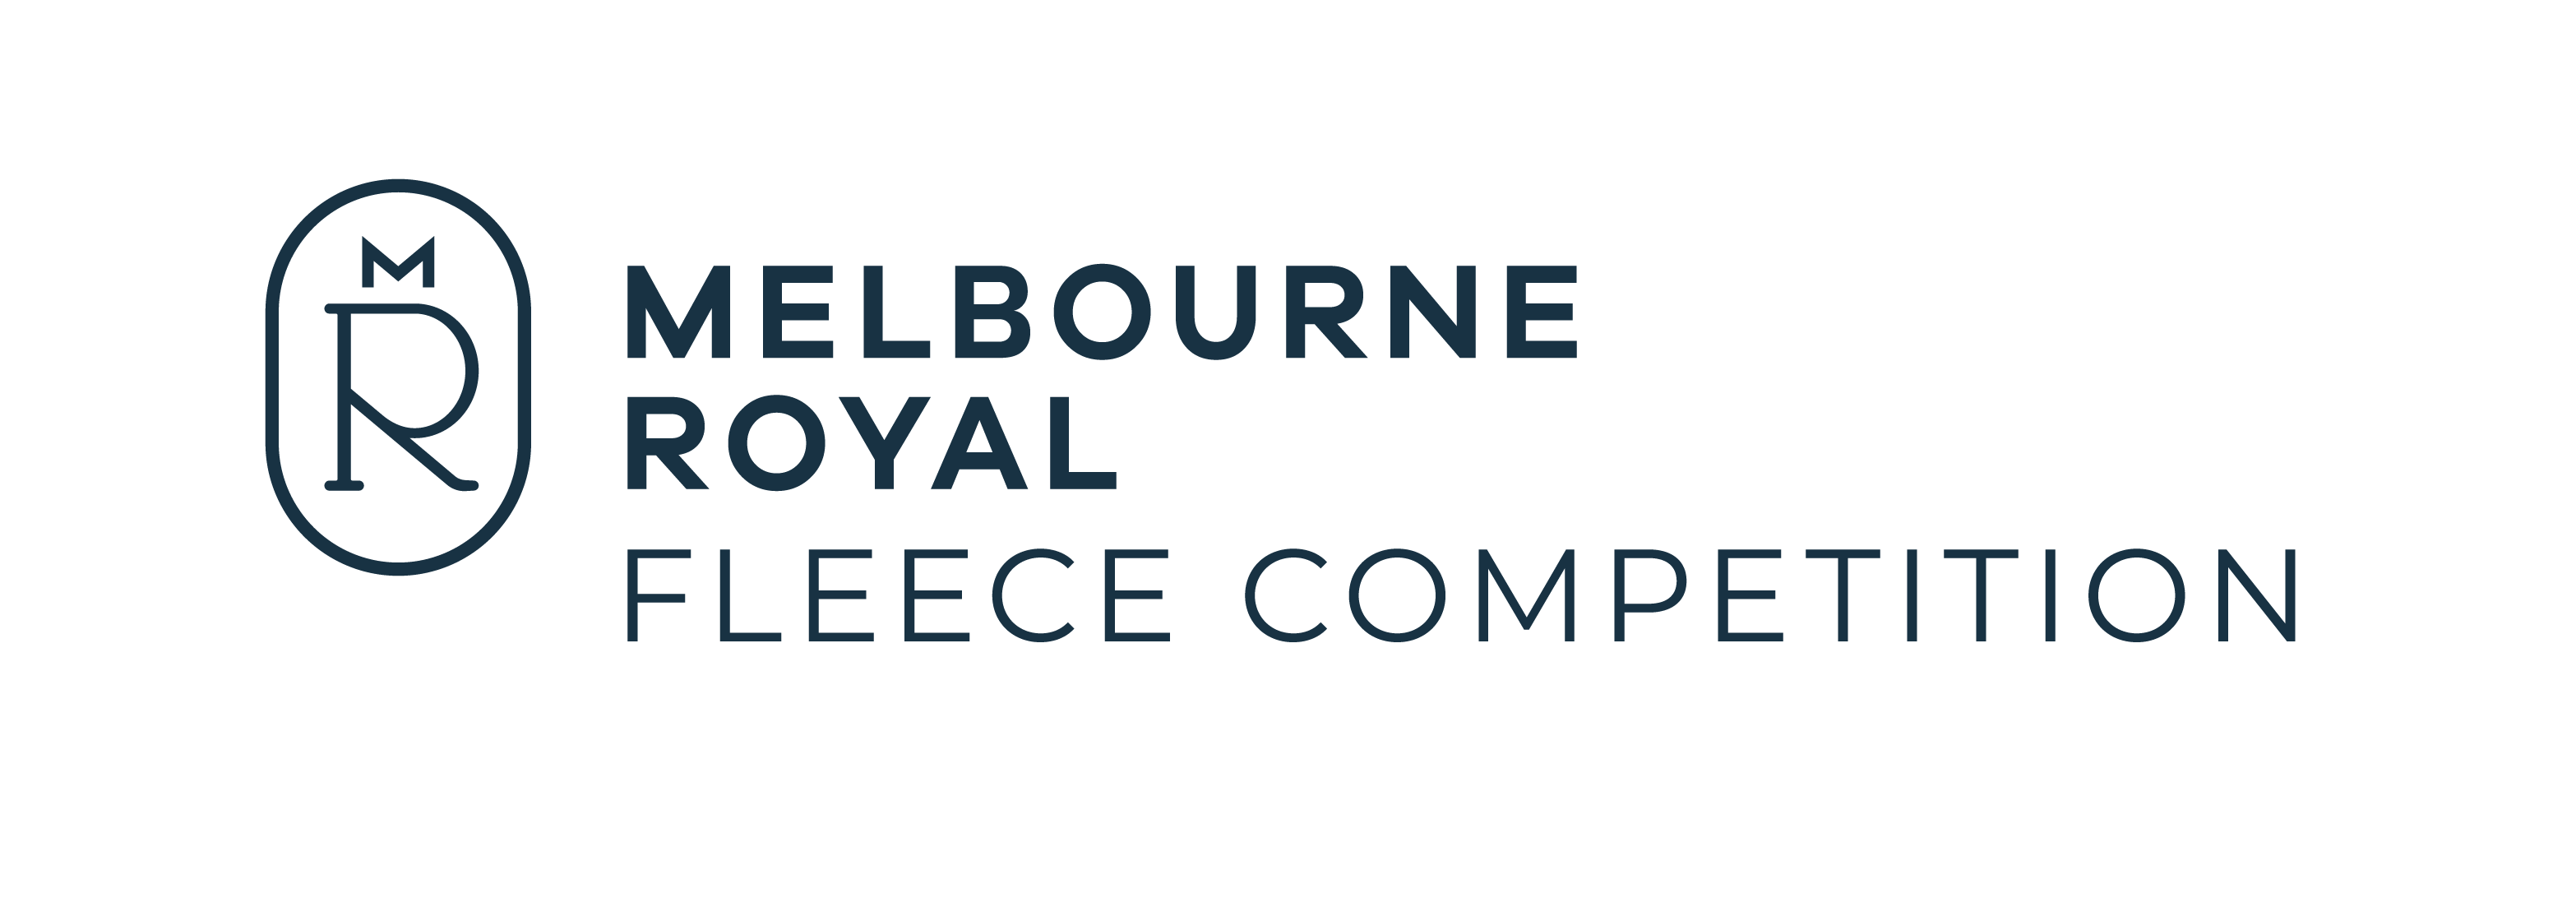 Melbourne Royal Fleece Competition | Home